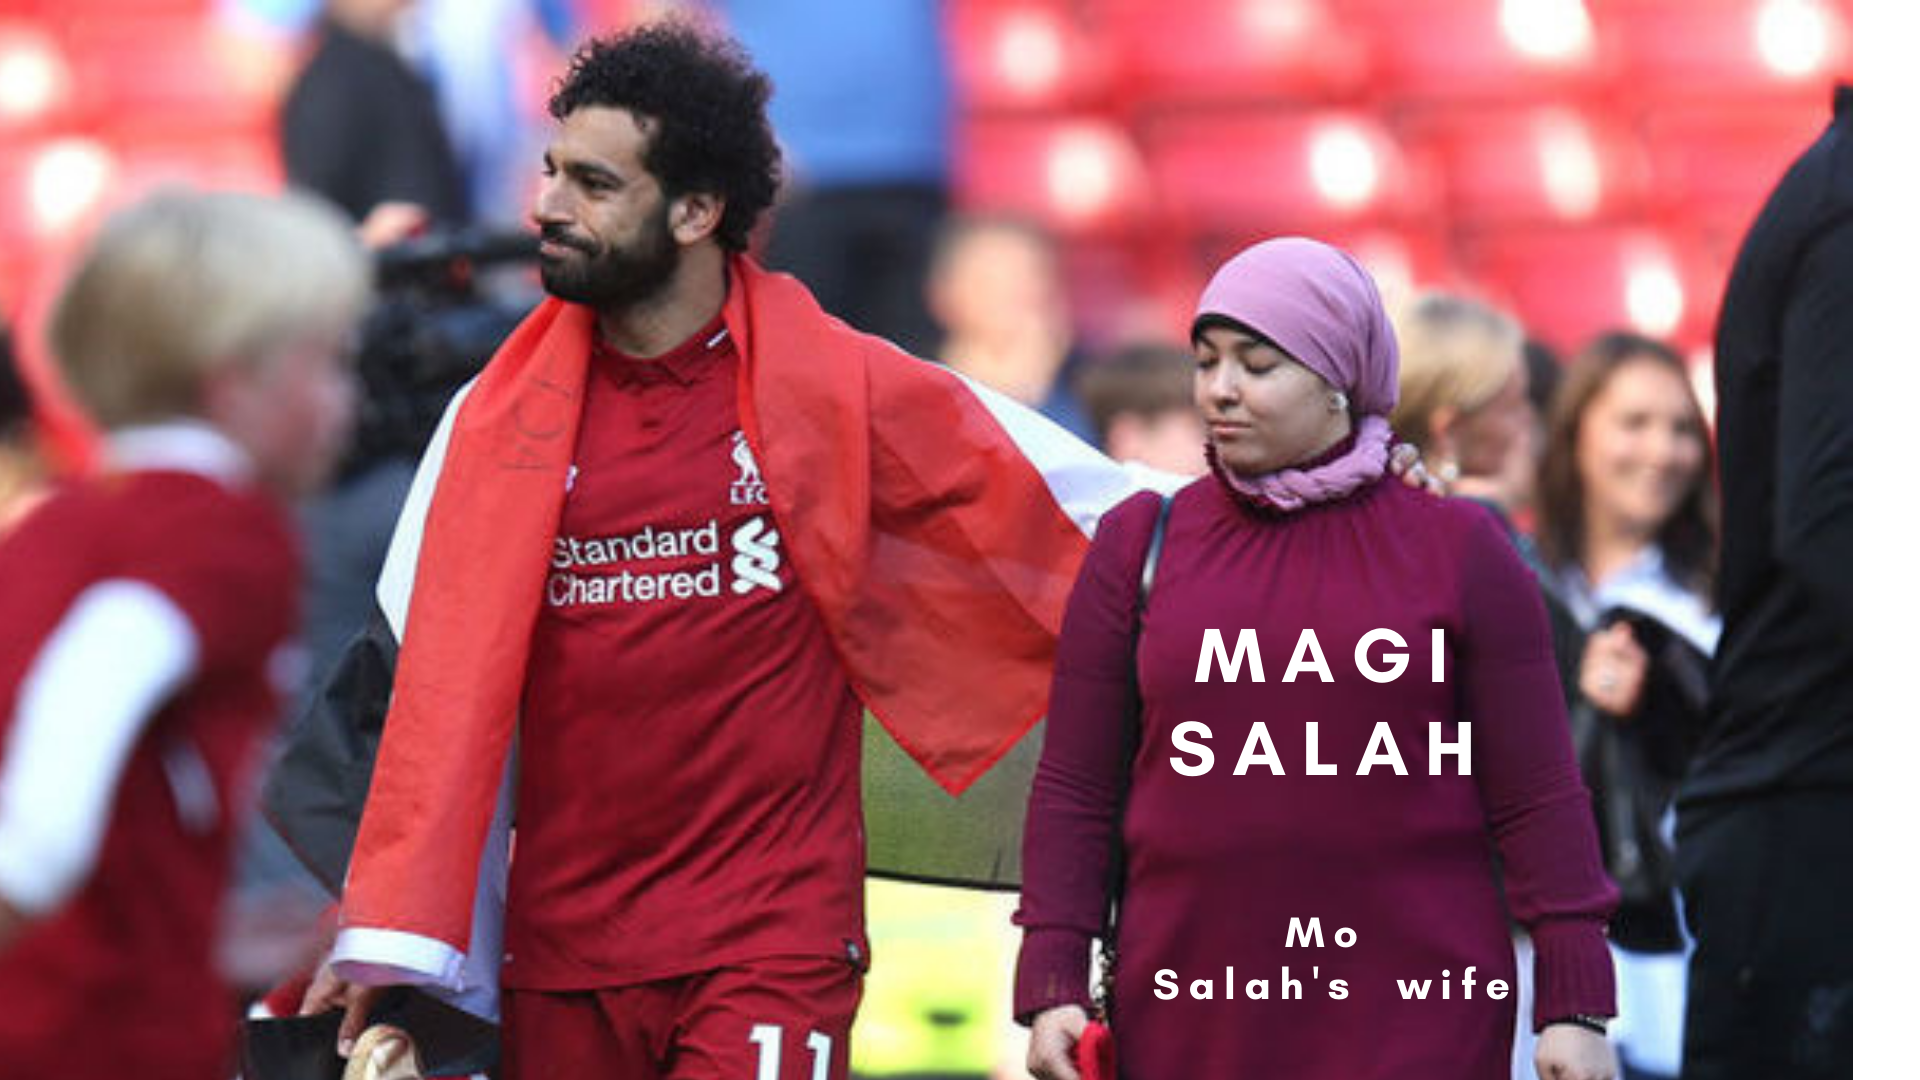 Magi Salah: Mohamed Salah wife, family, kids, career and net worth